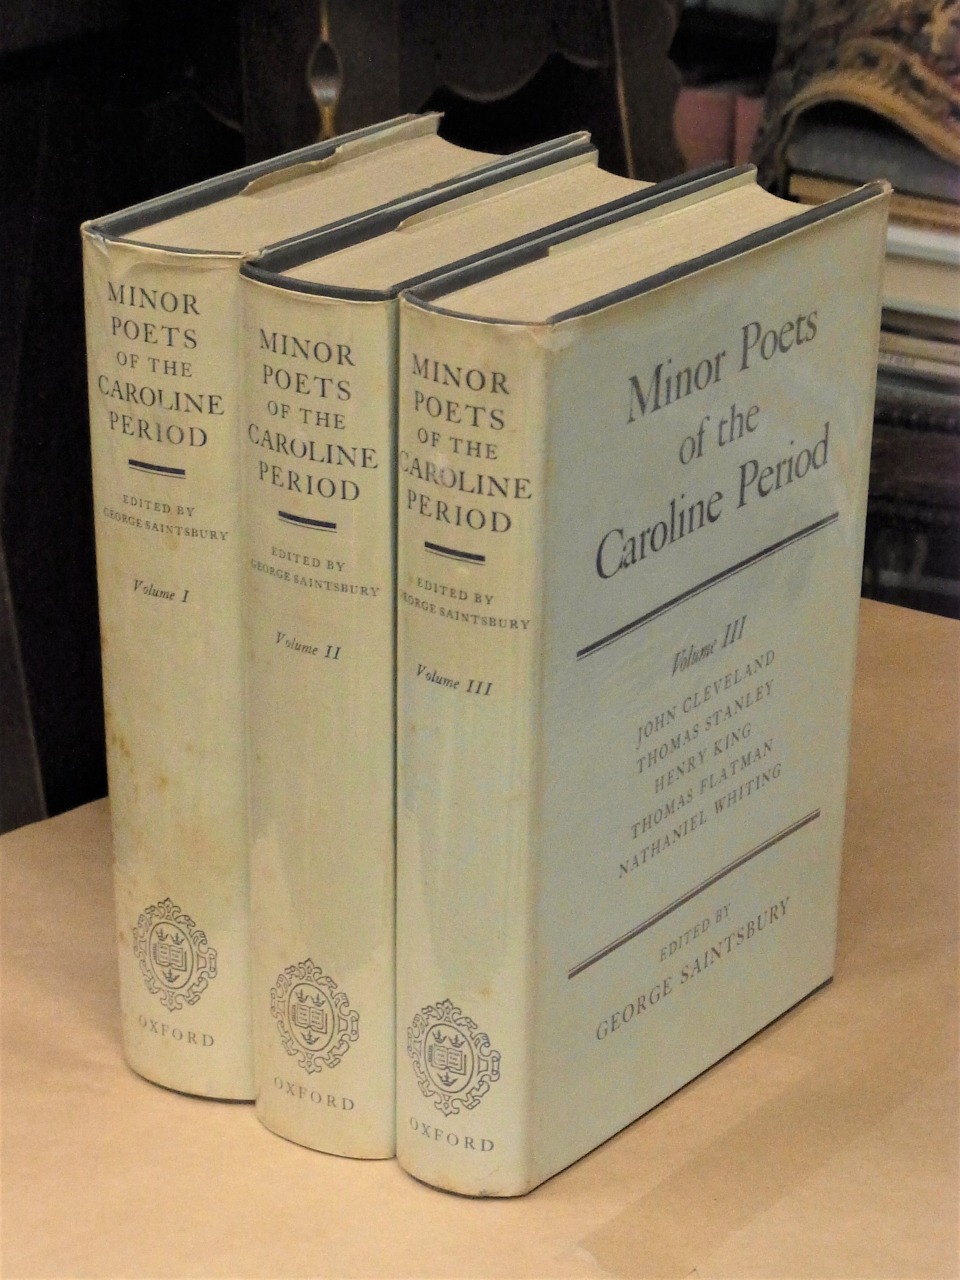 Minor poets of the Caroline period, v. 1-3